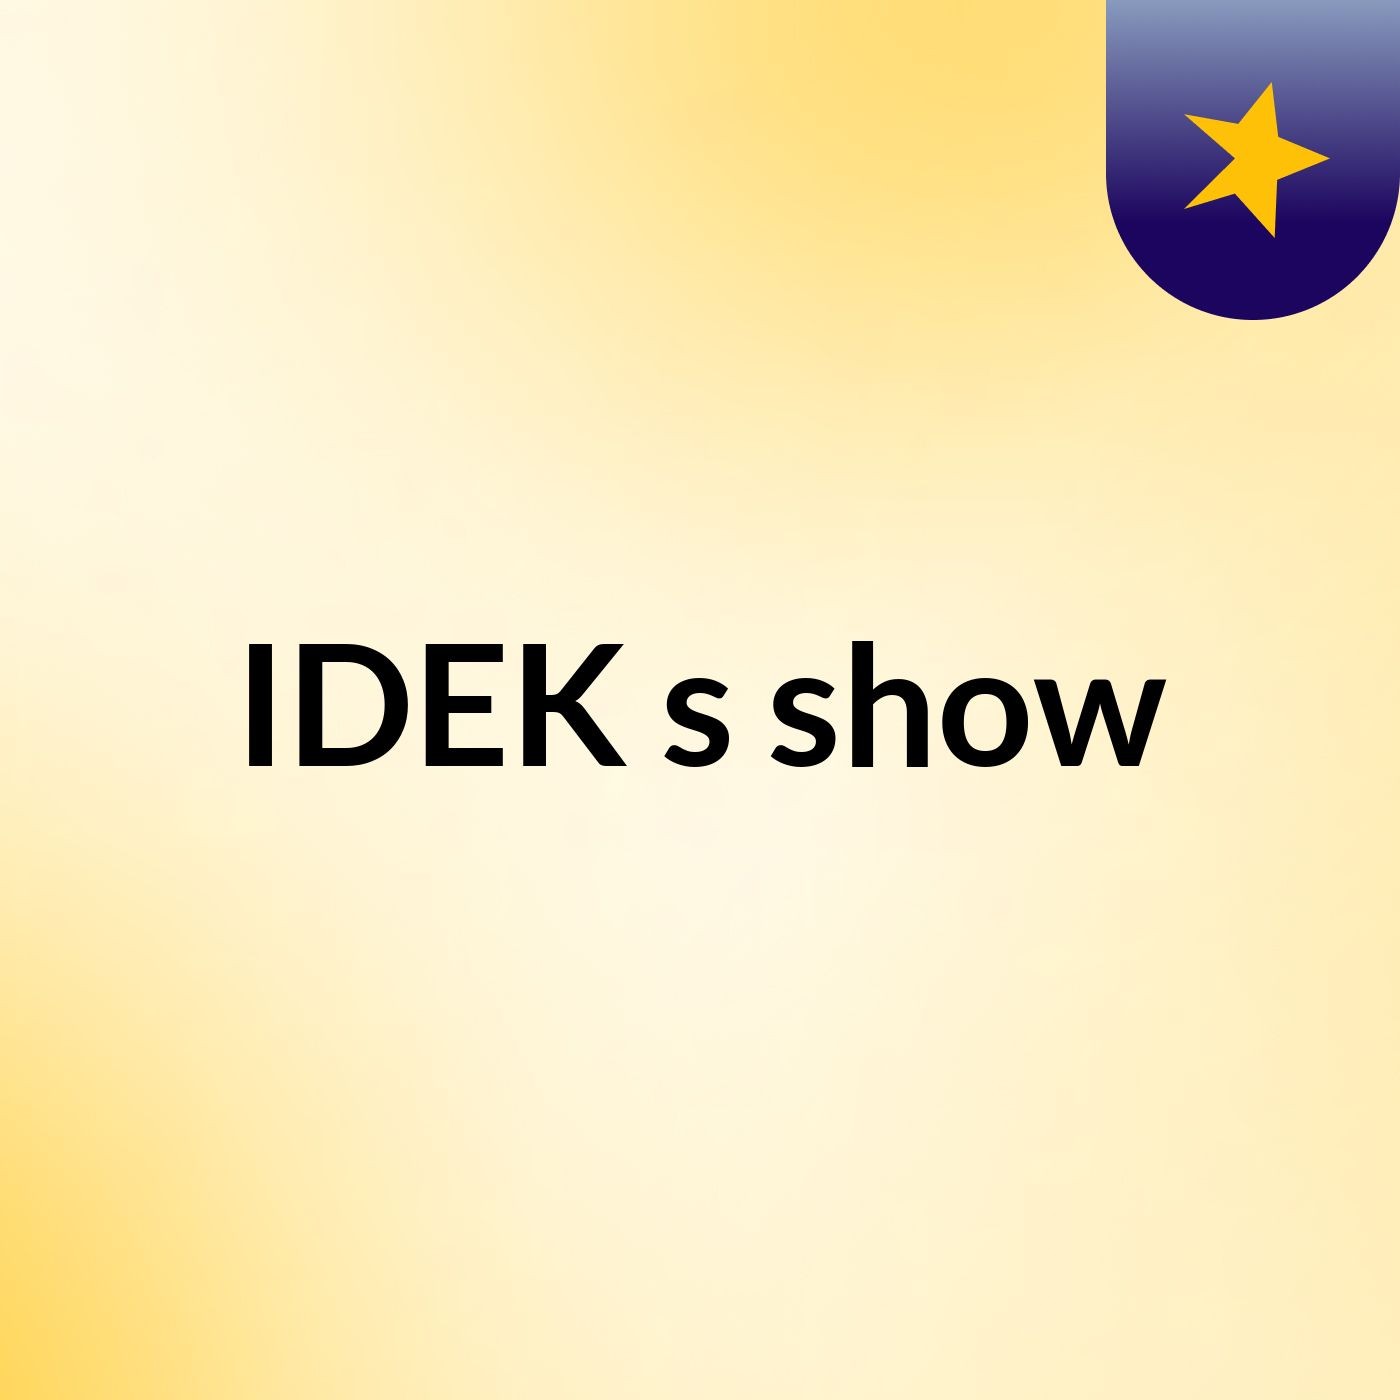 IDEK's show